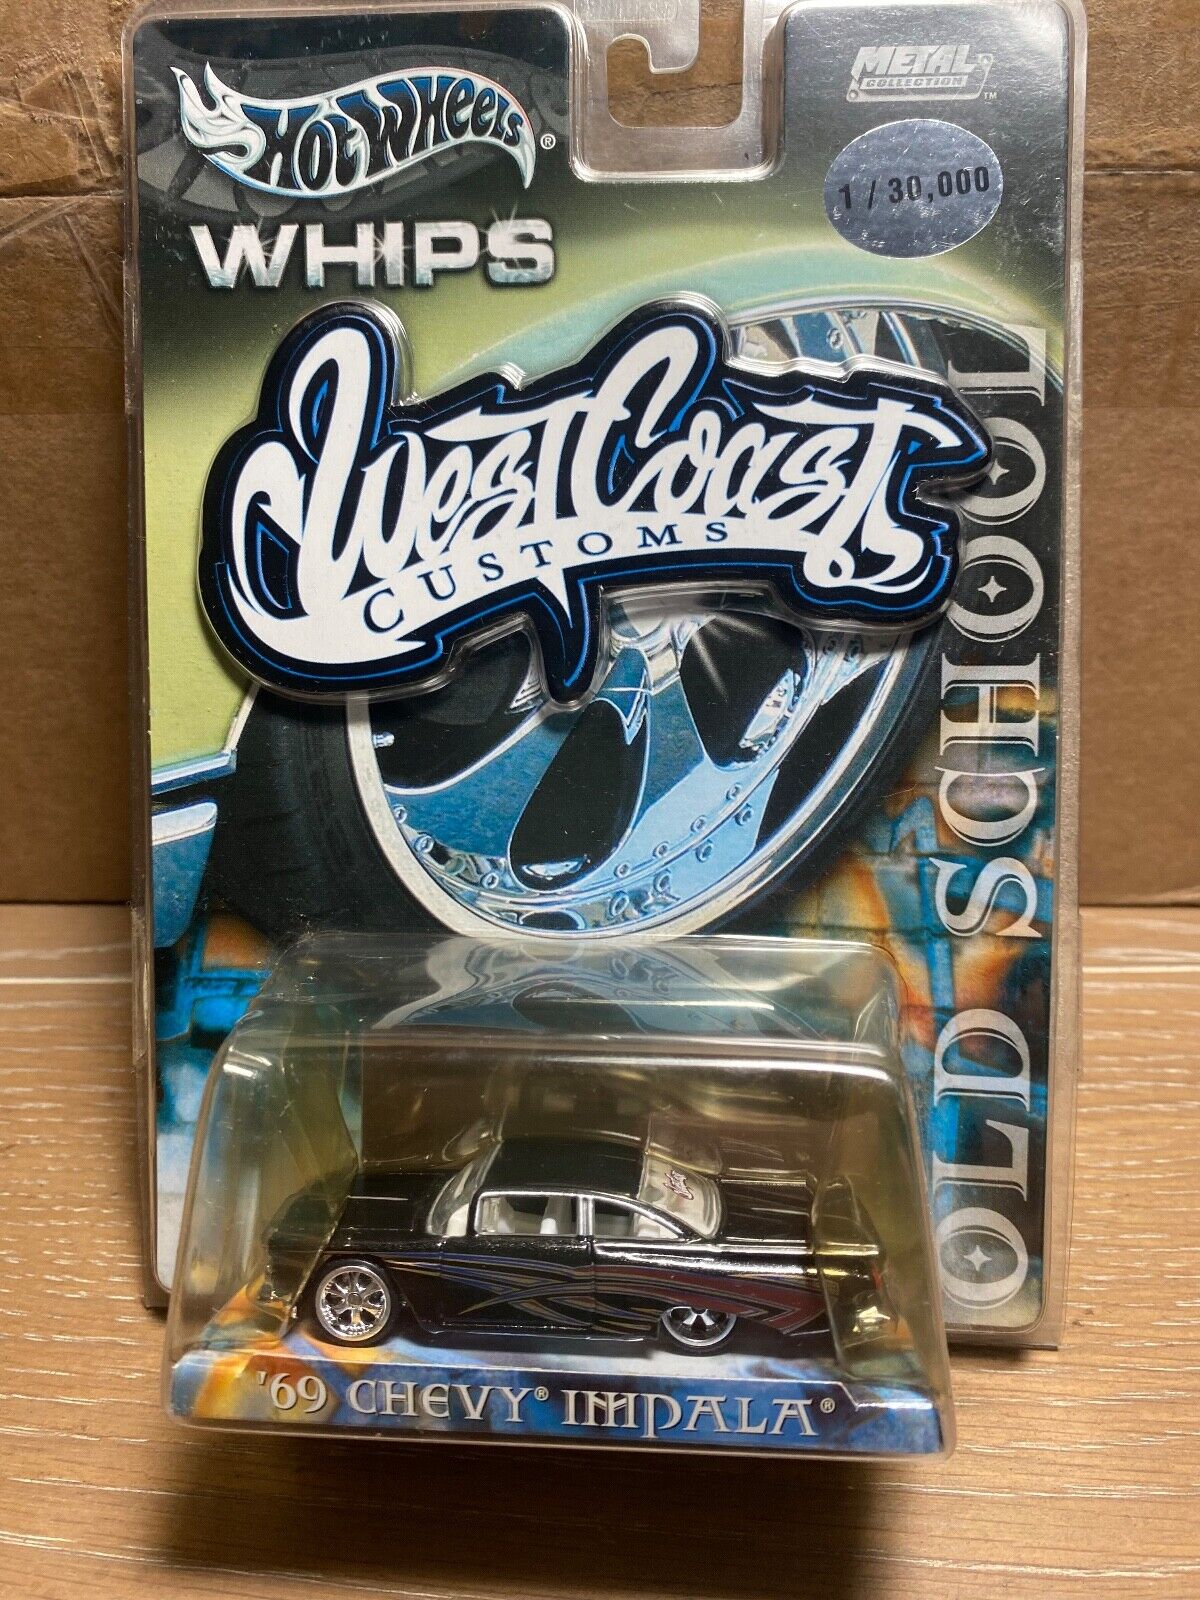 Hot Wheels Whips '69 Chevy Impala West Coast Customs 1/30000 Black